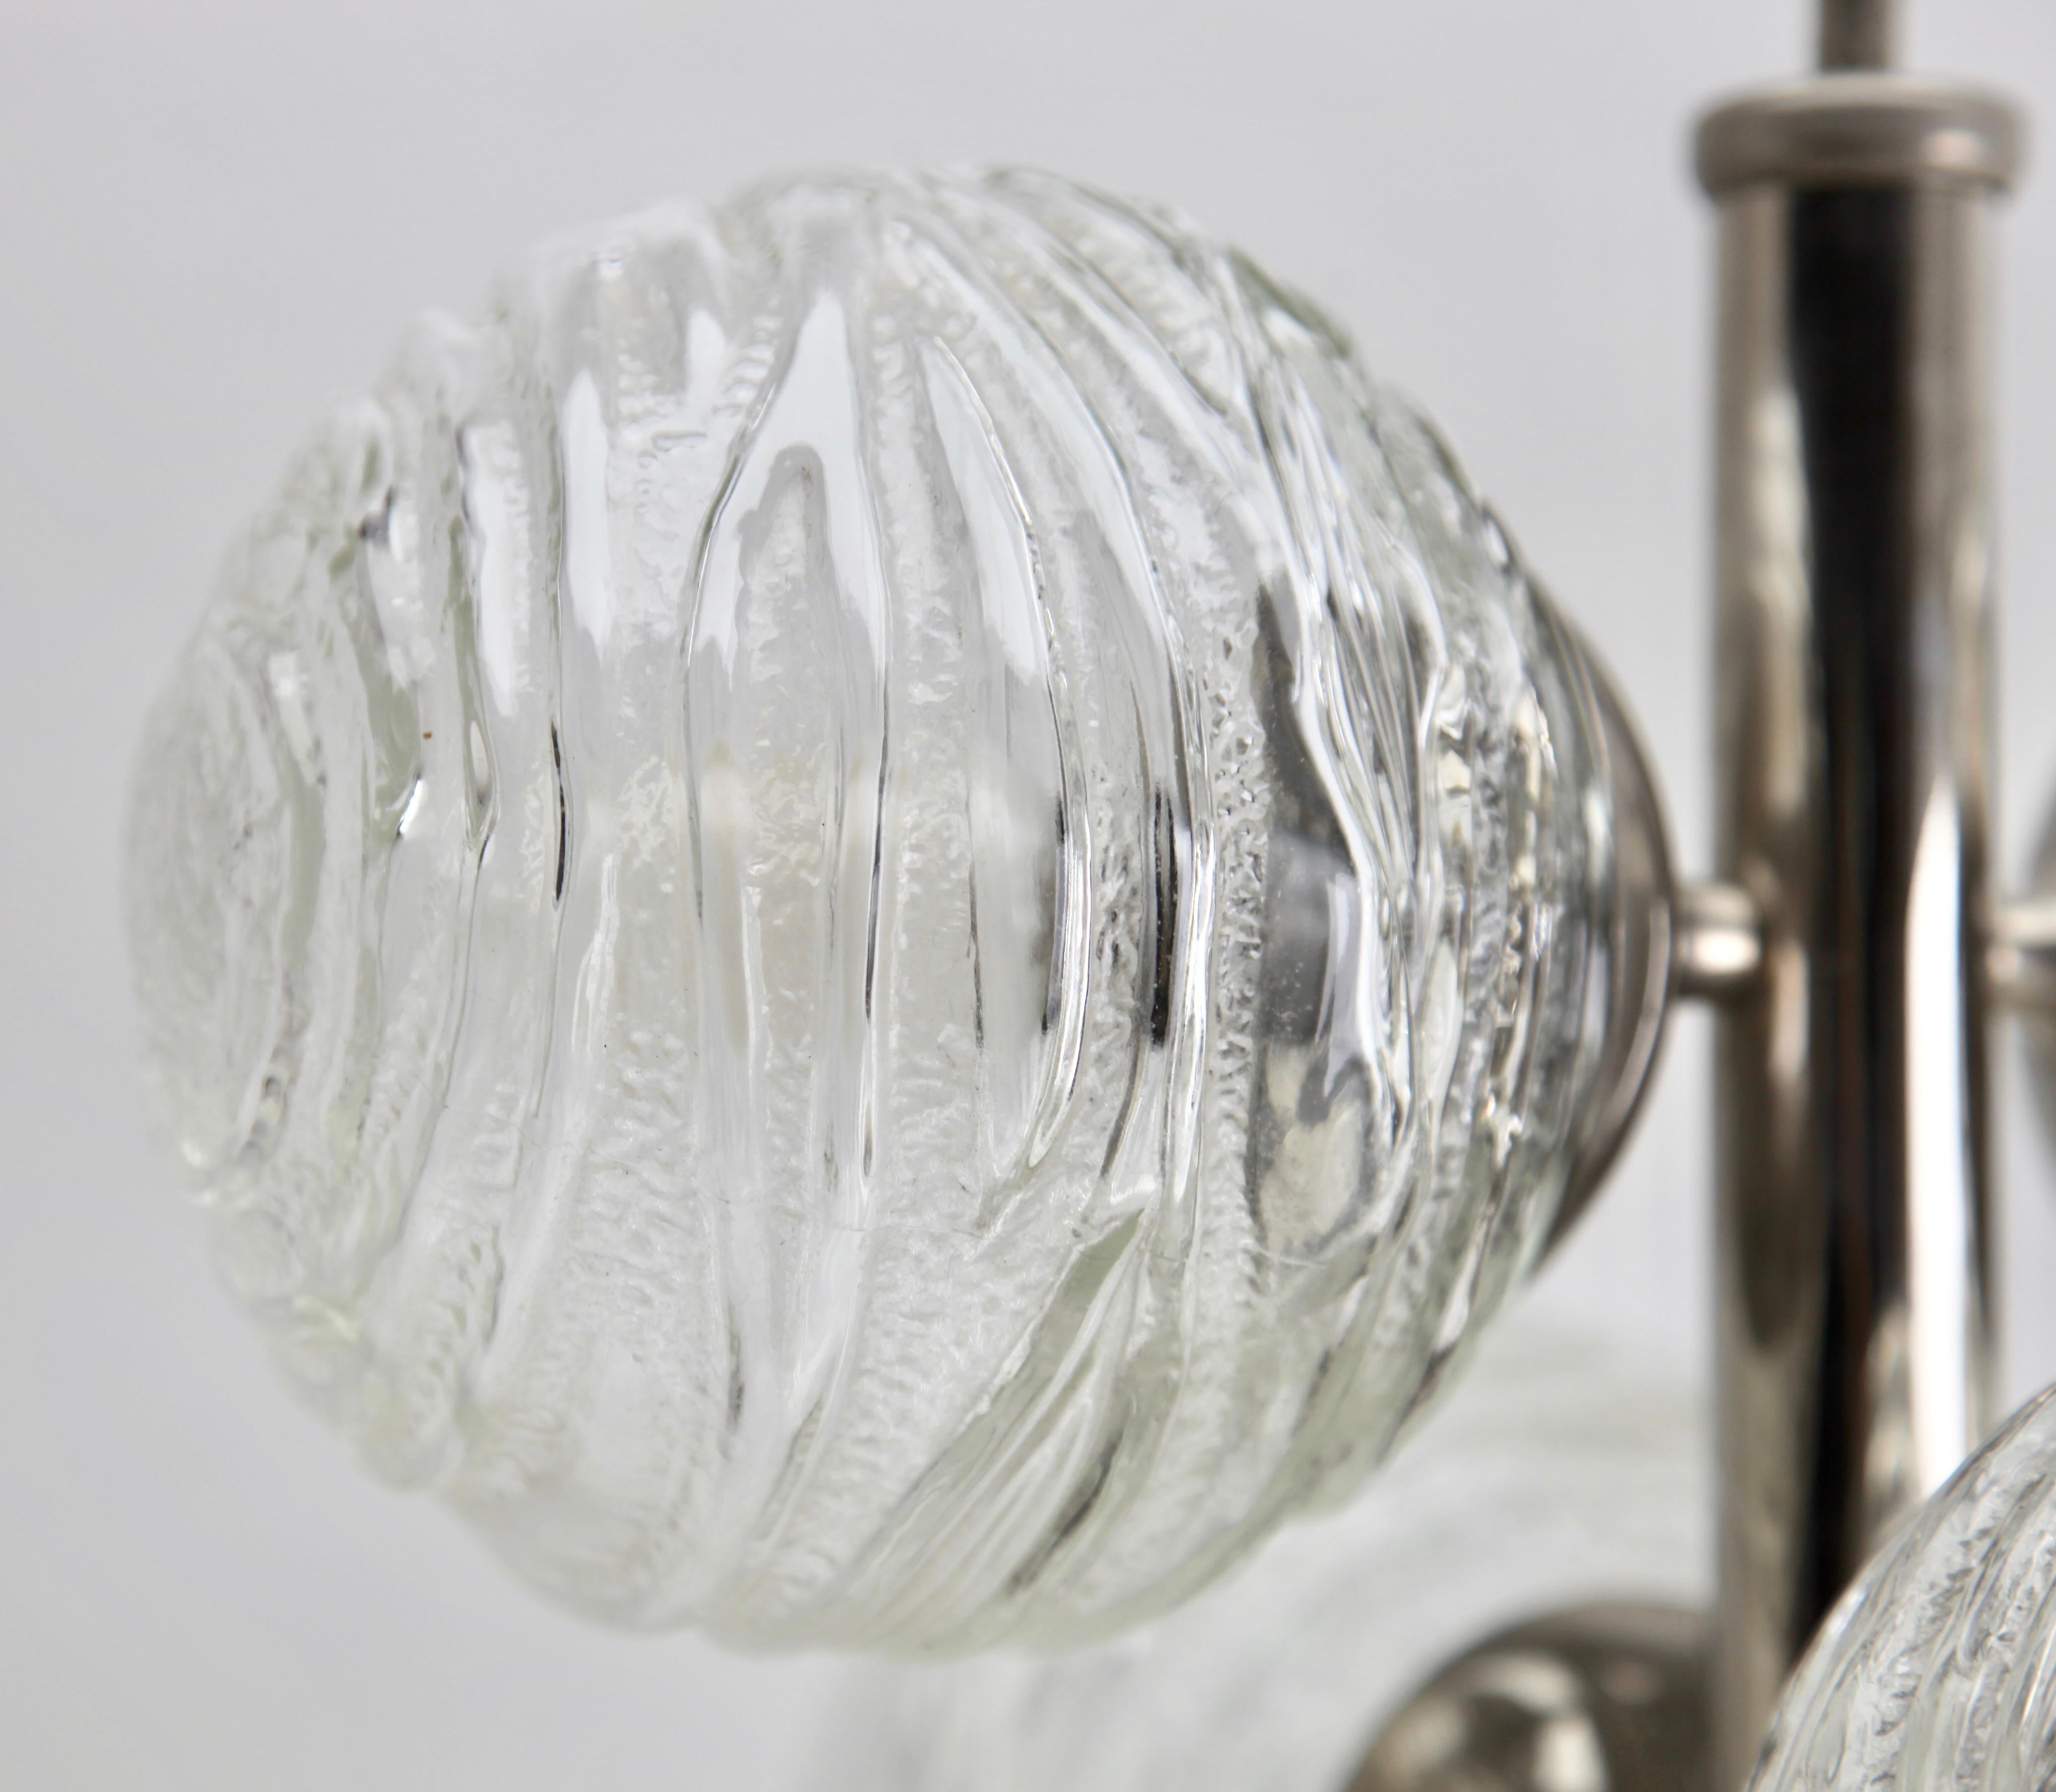 Fischer Leuchten ‘Germany’ Swirl Ball Pendant Stem Lamp with 6 Globular Lights For Sale 1